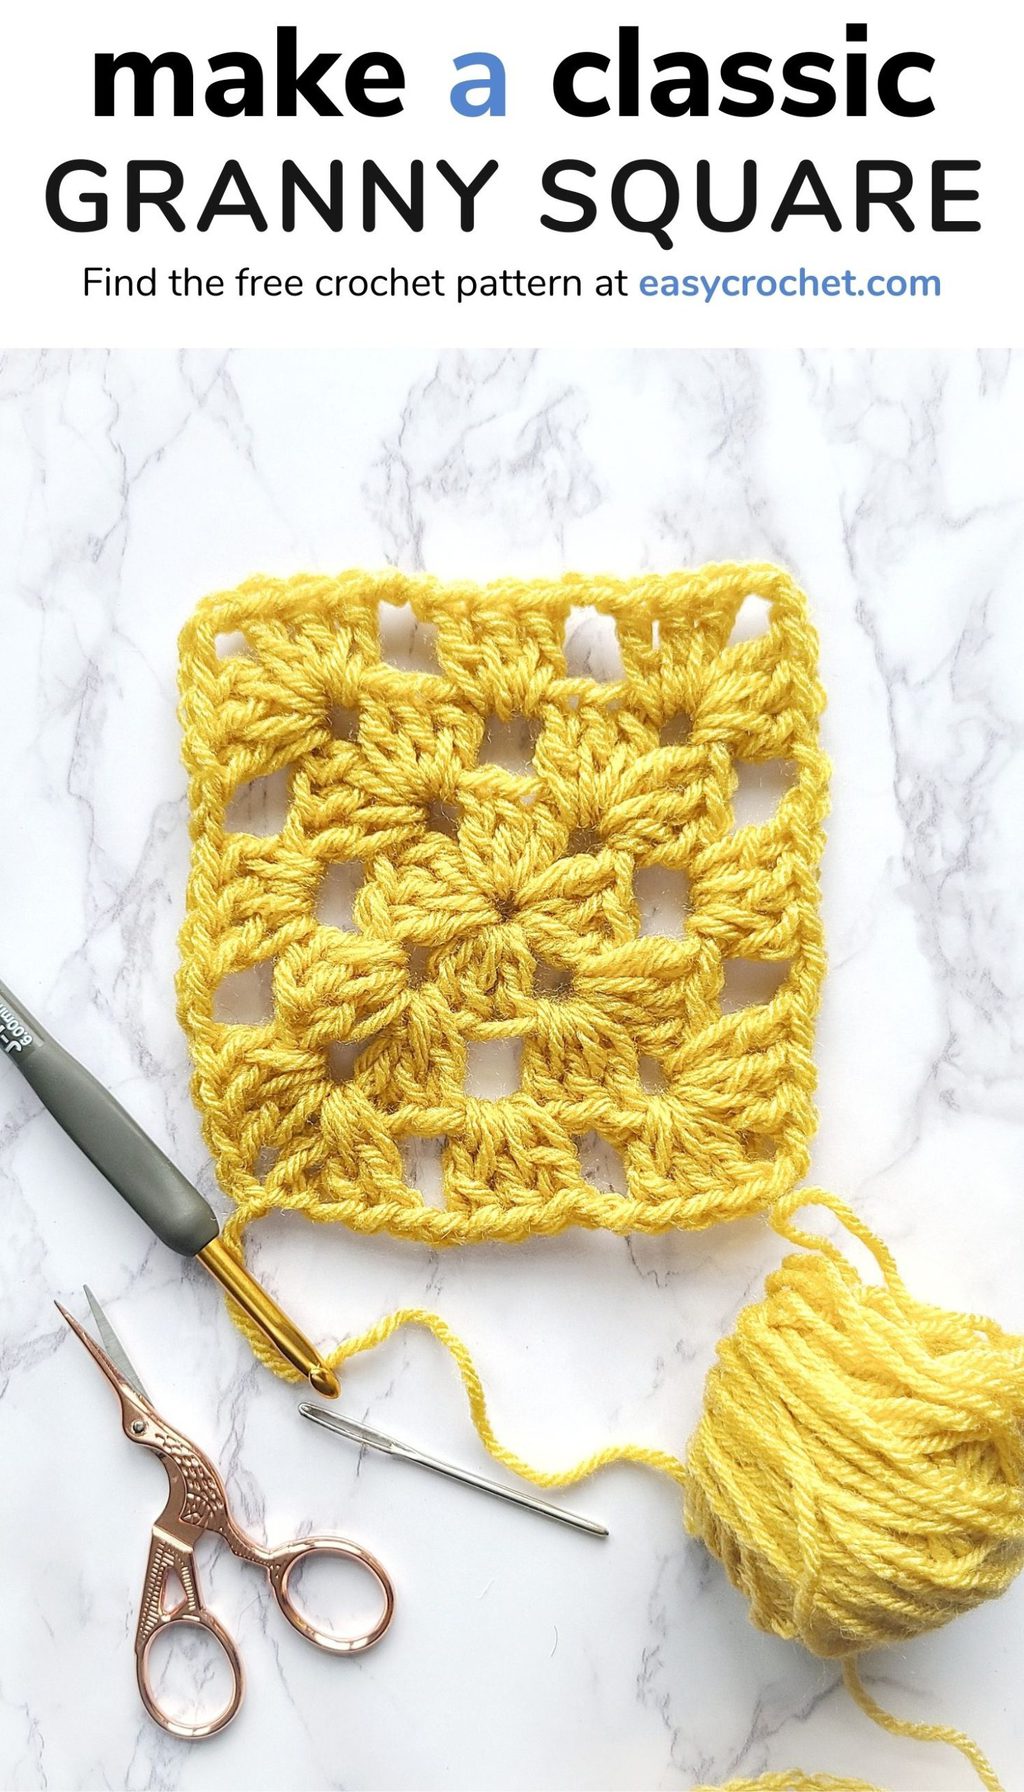 How to Crochet a Classic Granny Square Pattern for Beginners via @easycrochetcom